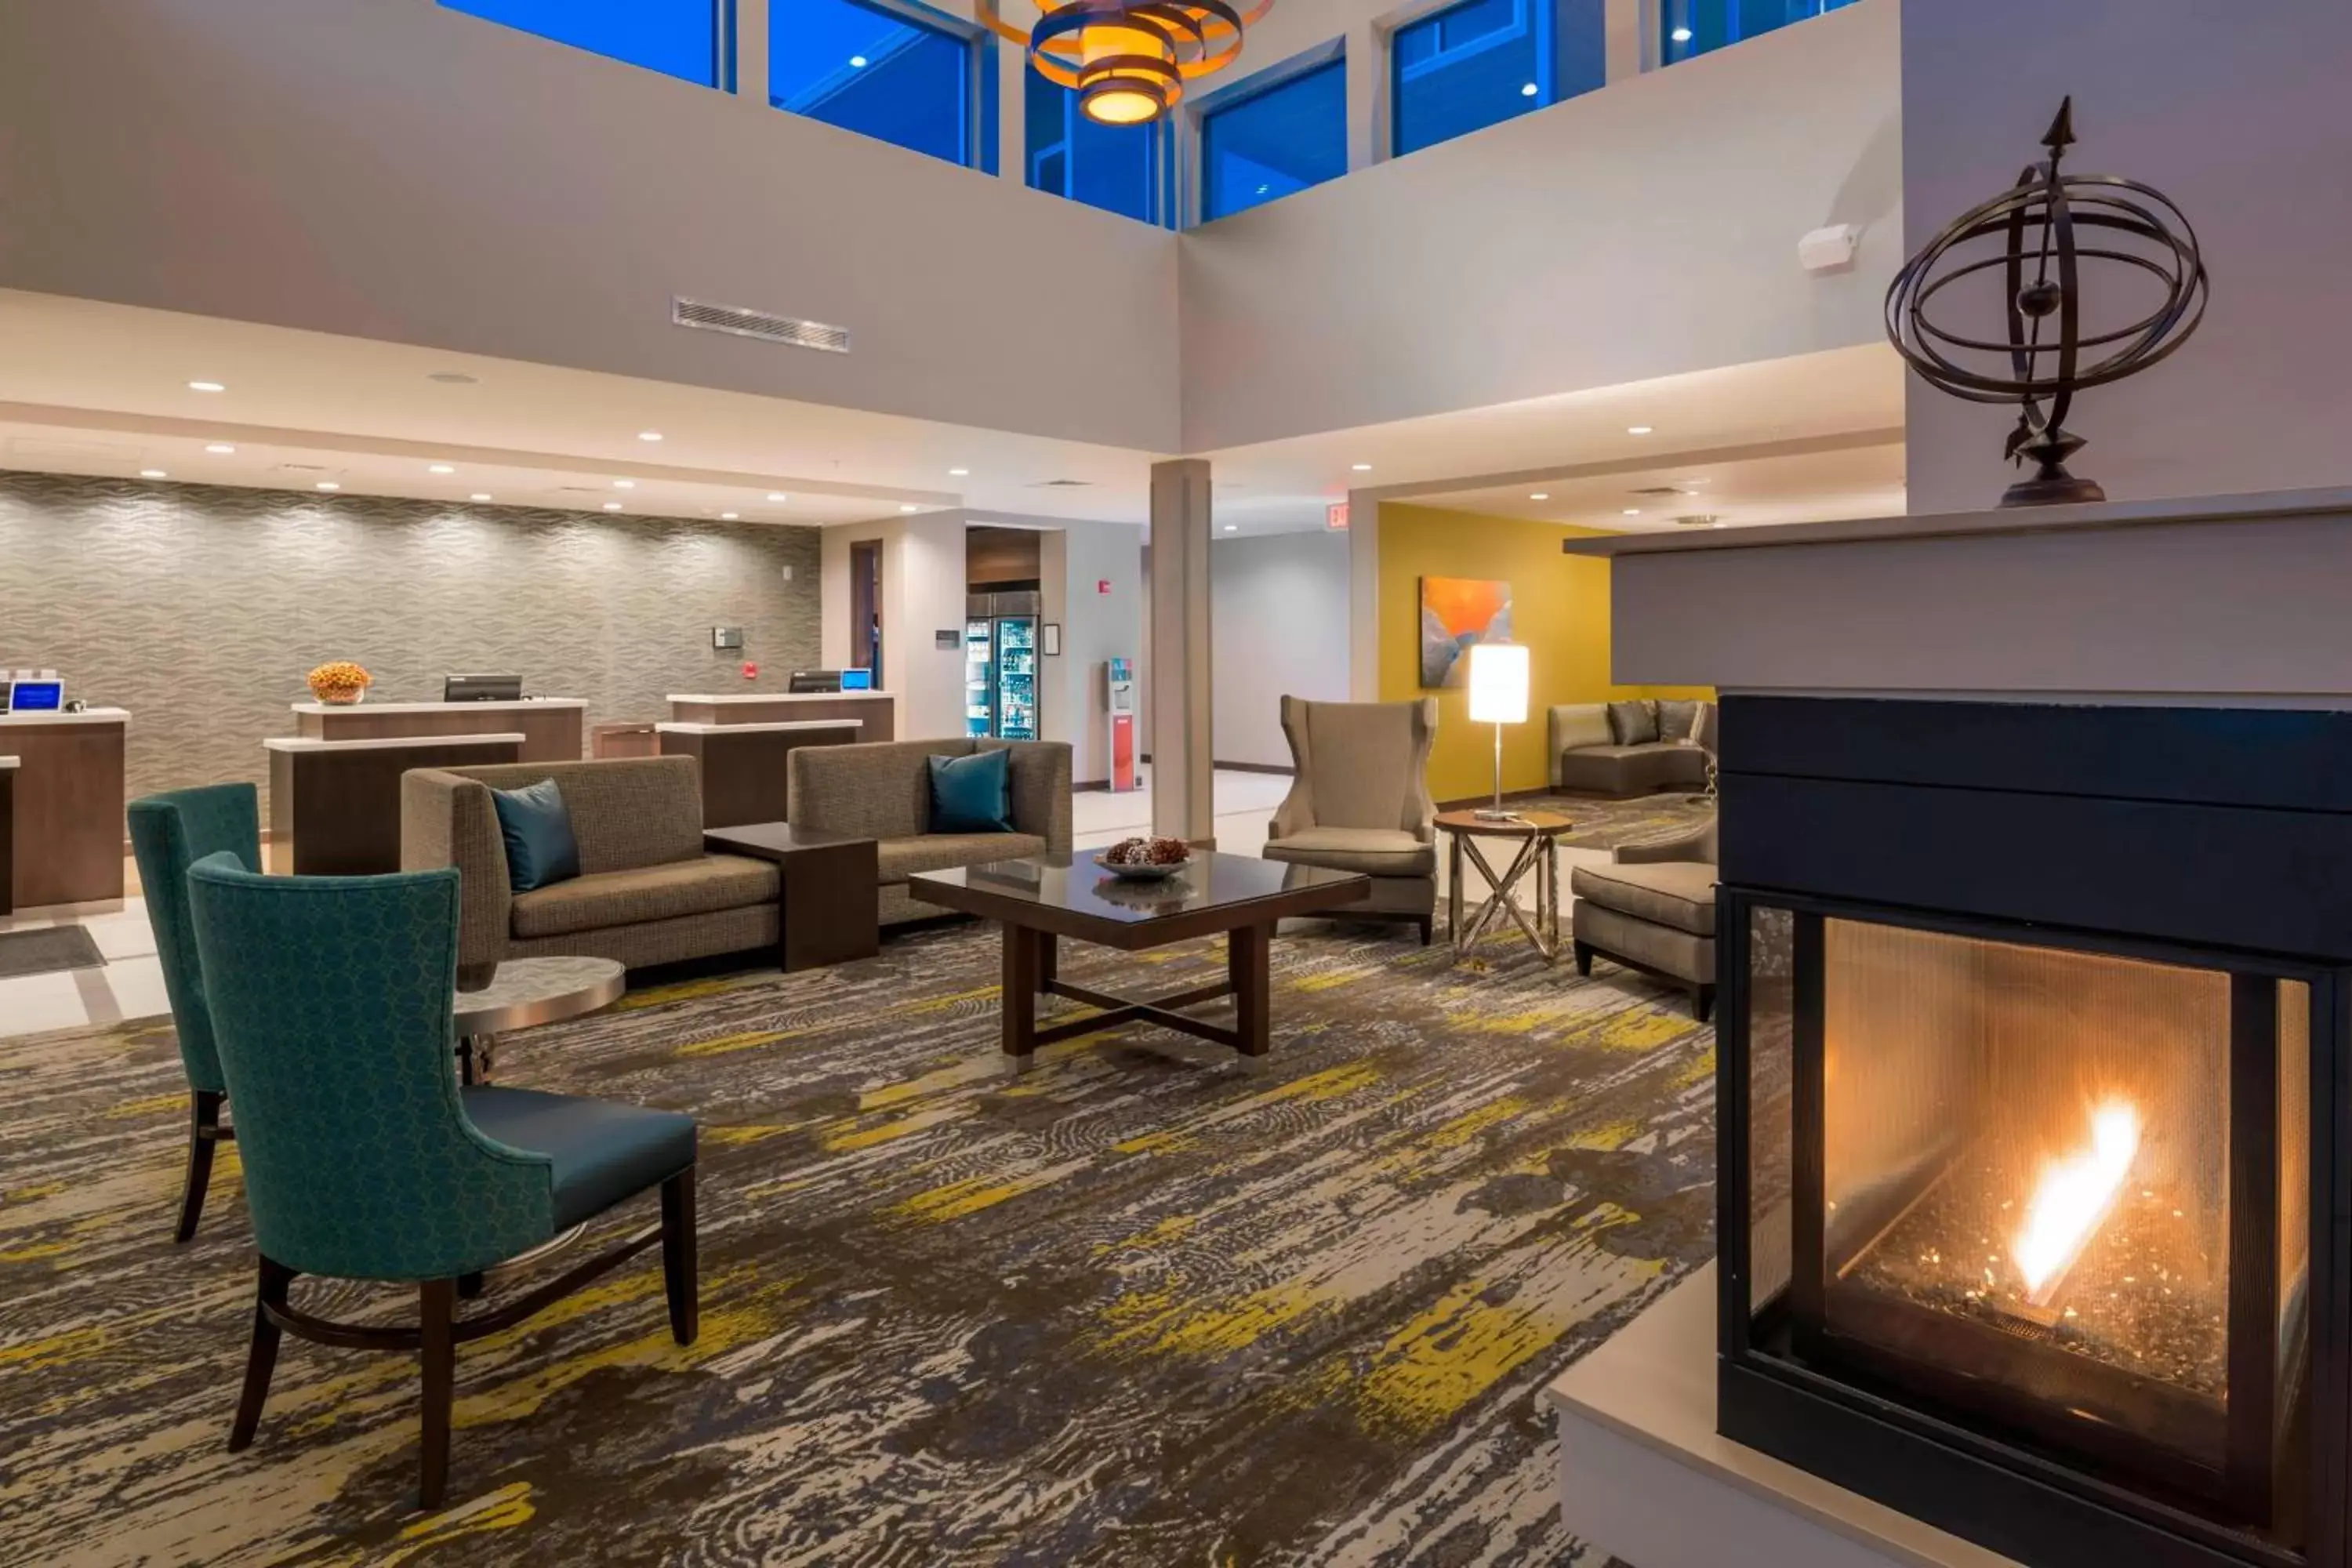 Lobby or reception in Residence Inn by Marriott Fishkill